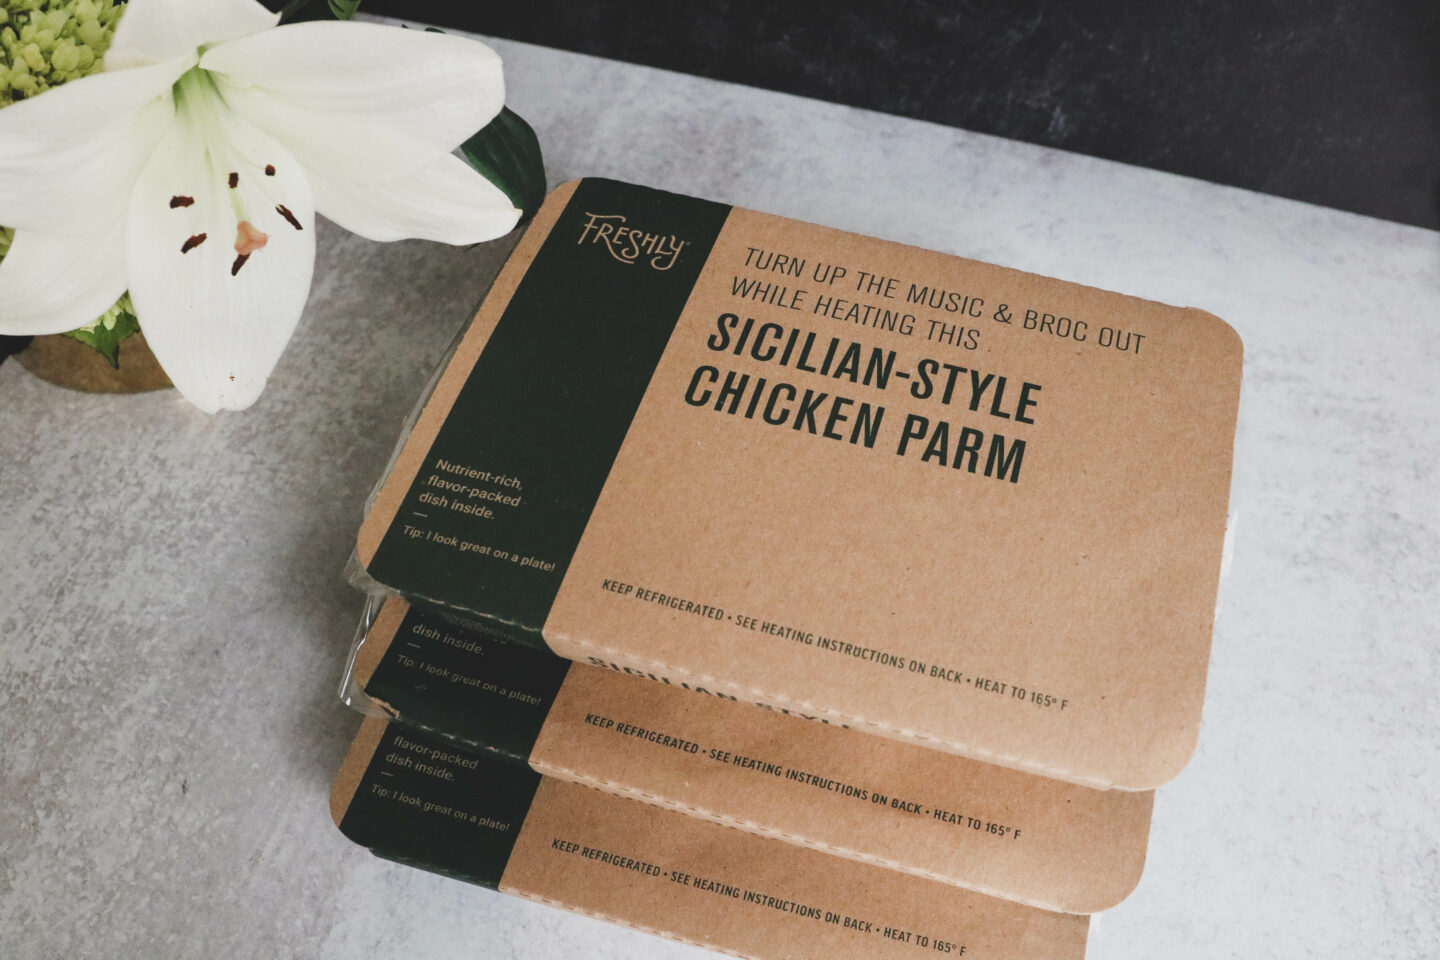 freshly sicilian-style chicken parm